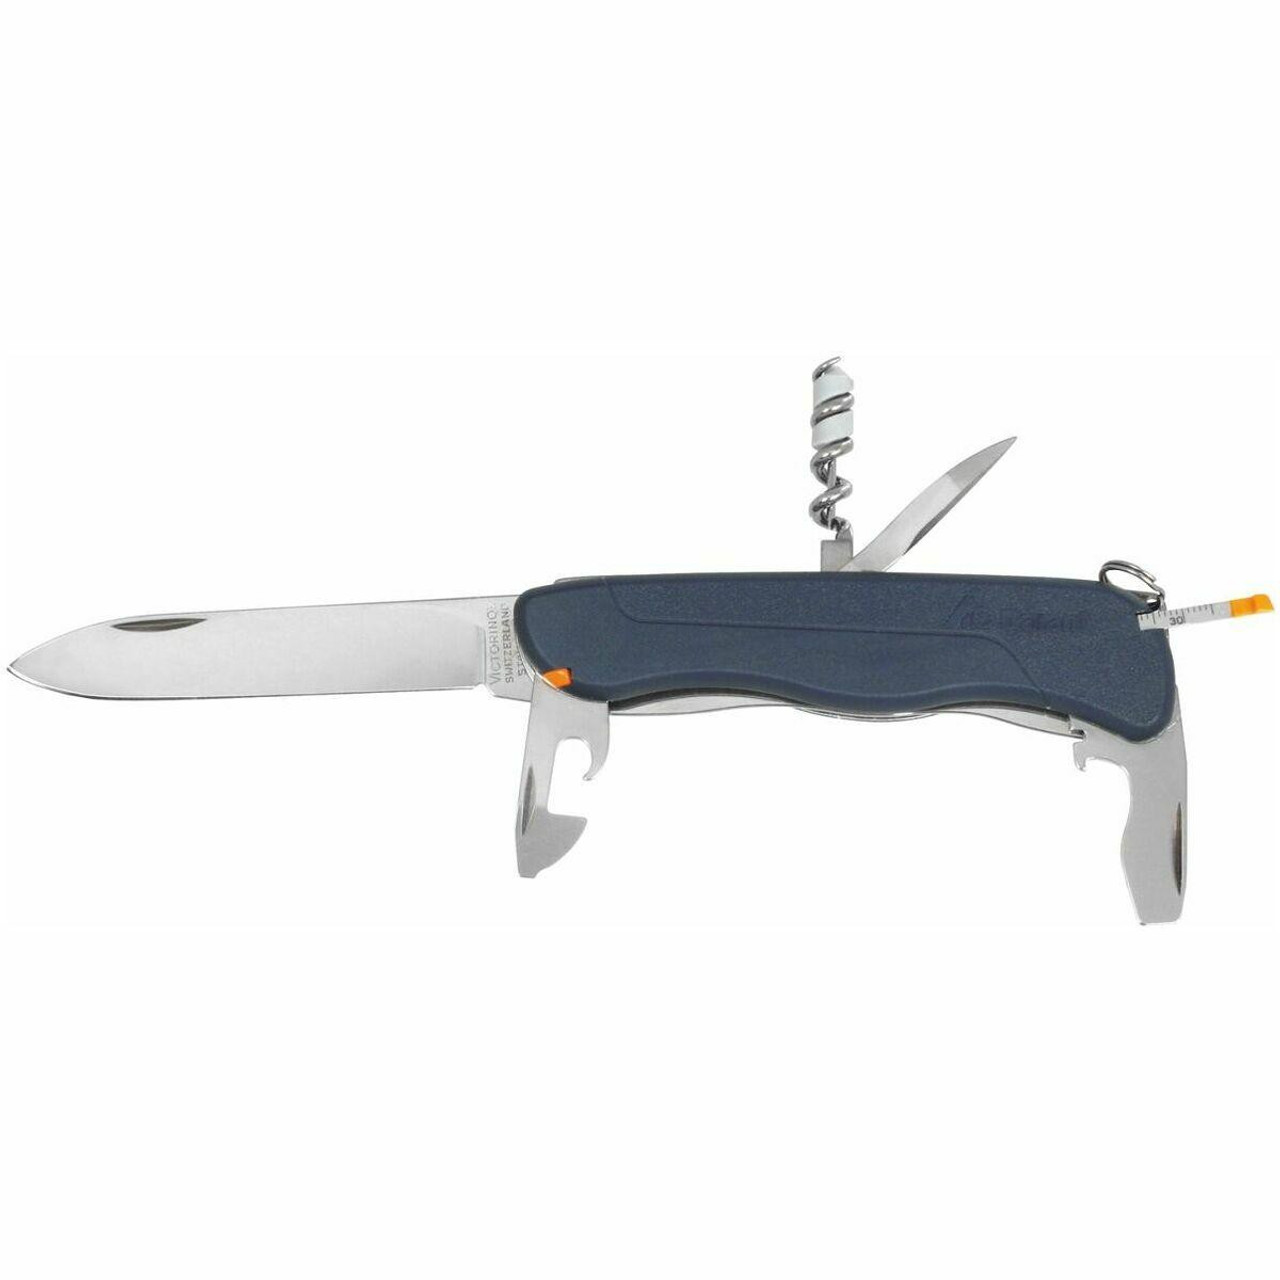 Garant Pocket Knife/ Multi-Tool